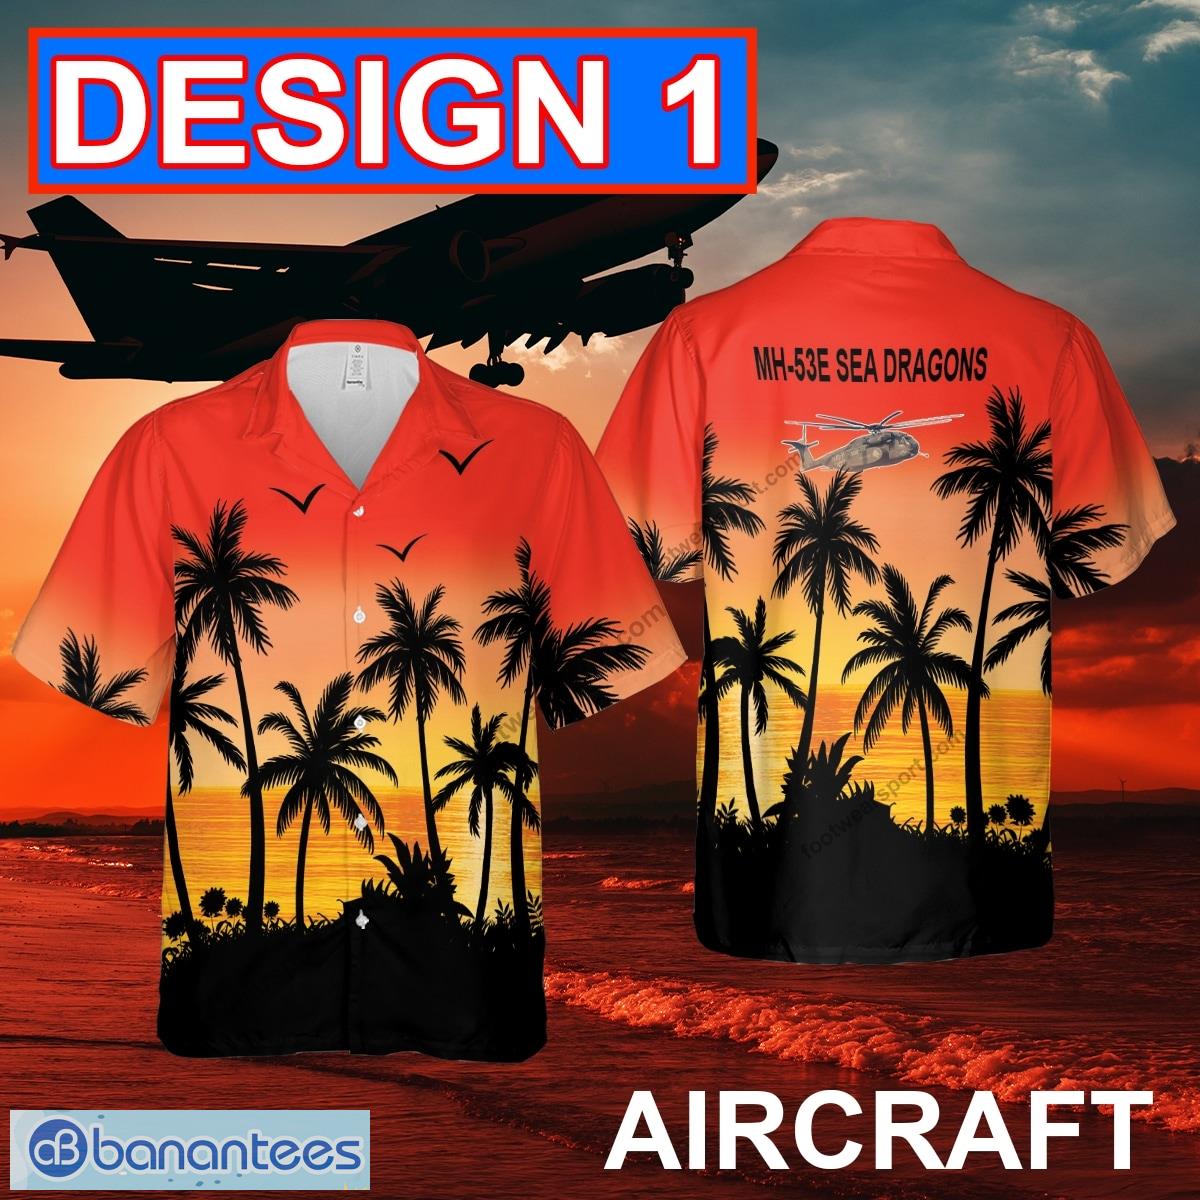 MH-53E Sea Dragons MH53E Aircraft Hawaiian Shirt Red Color Gift For Fans - MH-53E Sea Dragons MH53E Aircraft Hawaiian Shirt Multi Design 1